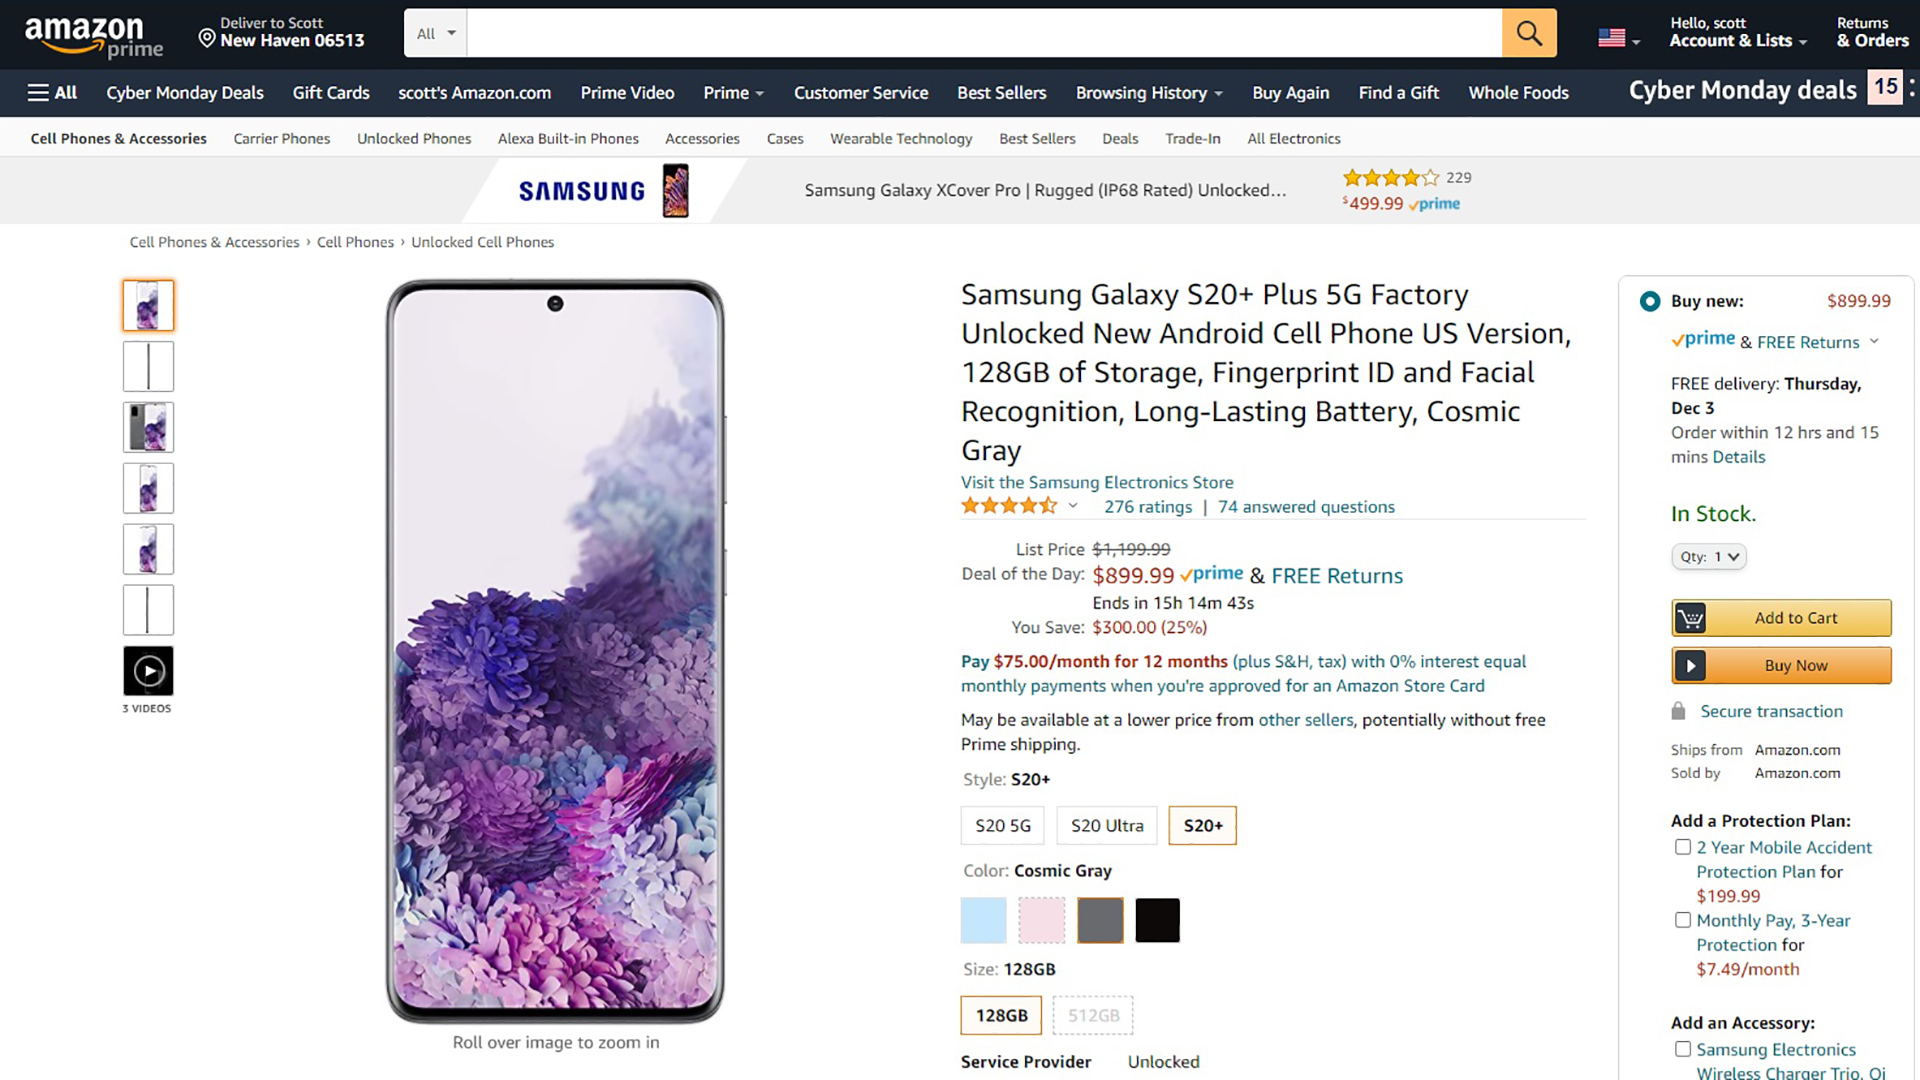 Samsung Galaxy S20 Plus Deal CM 2020